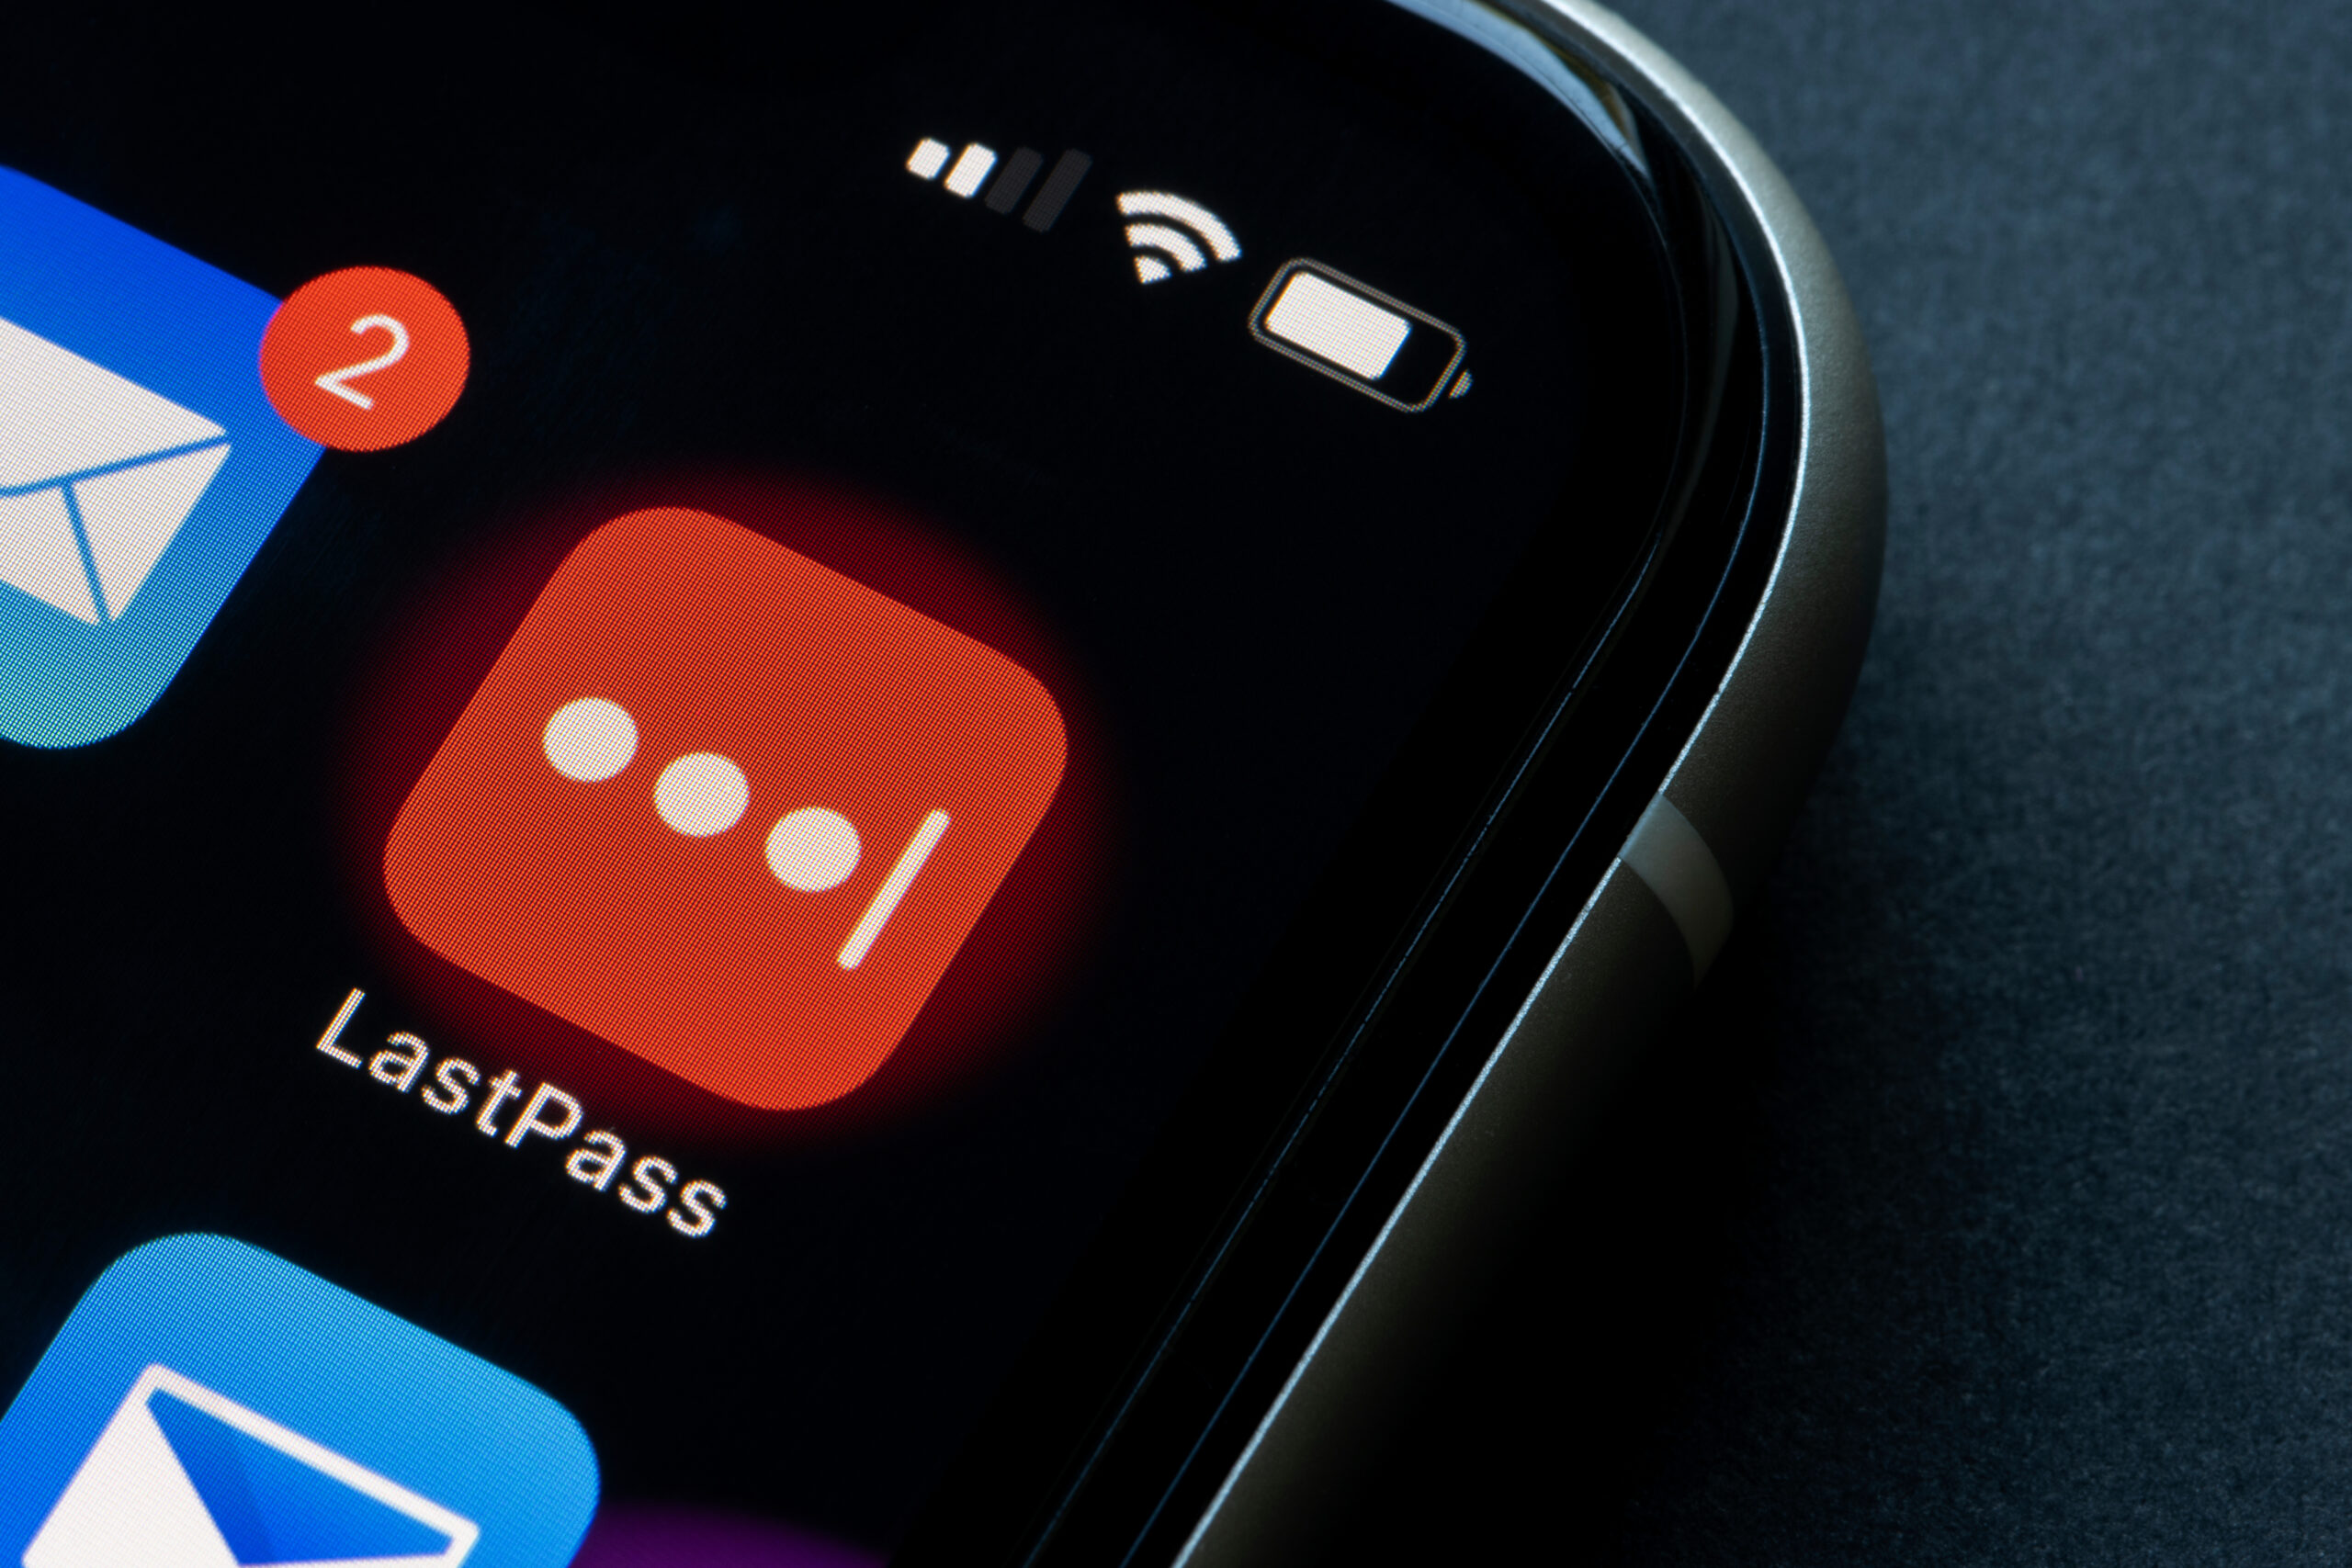 Portland, OR, USA - Mar 12, 2021: LastPass mobile app icon is se